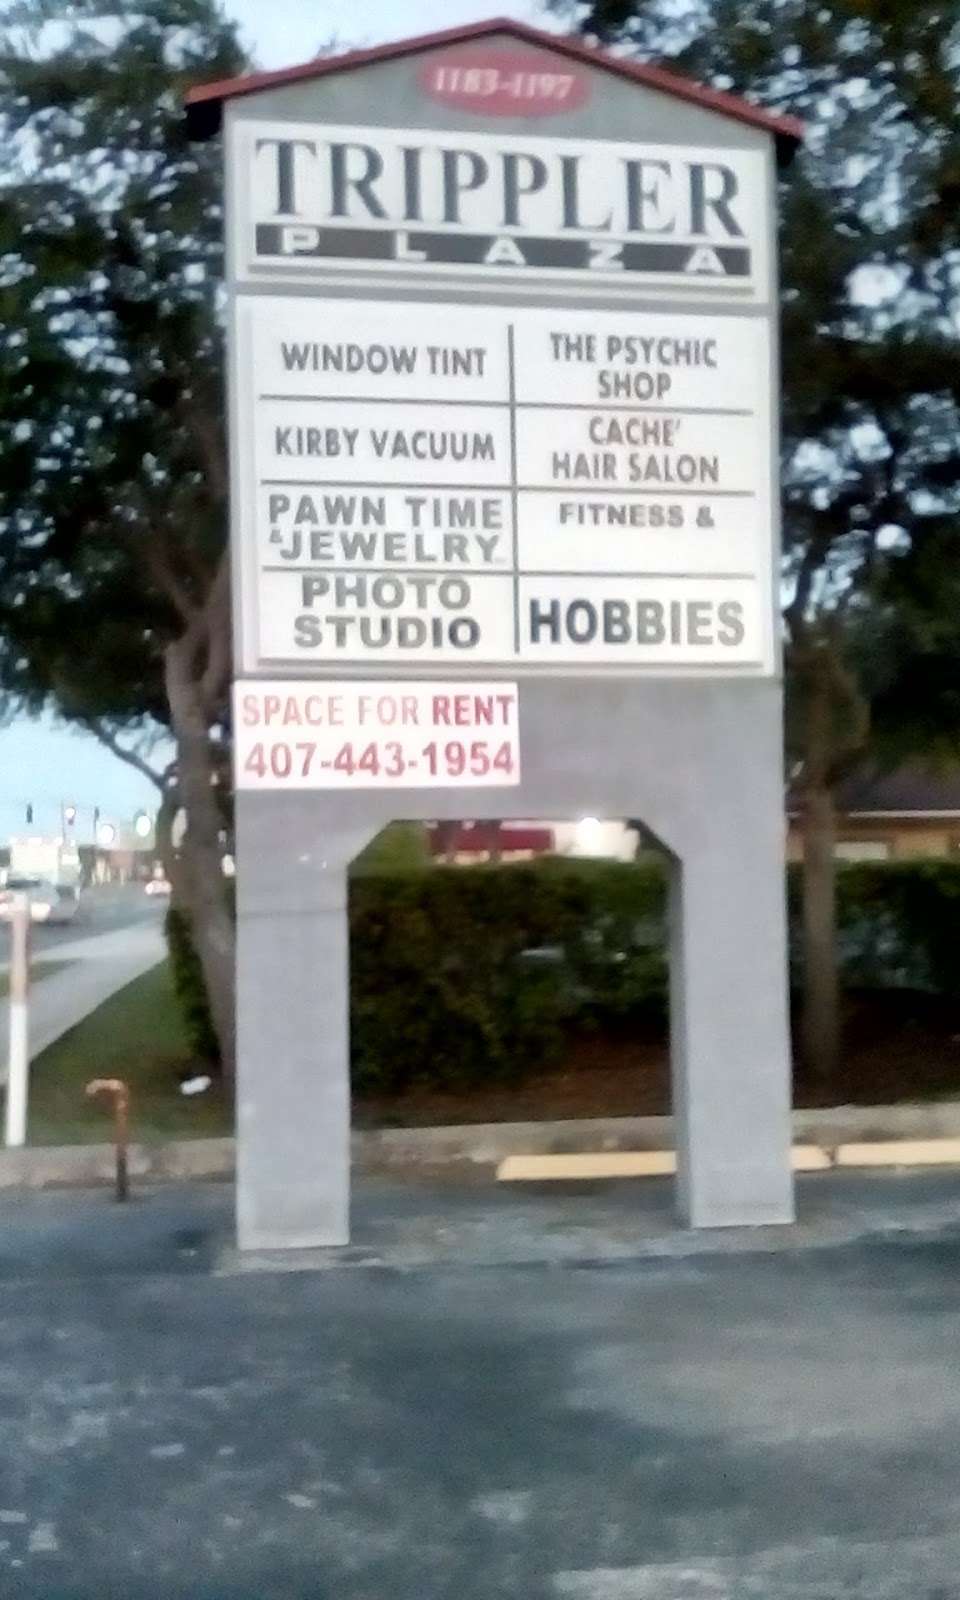 Pawn Time & Jewelry | 1191 E Altamonte Dr, Altamonte Springs, FL 32701, USA | Phone: (407) 788-7846